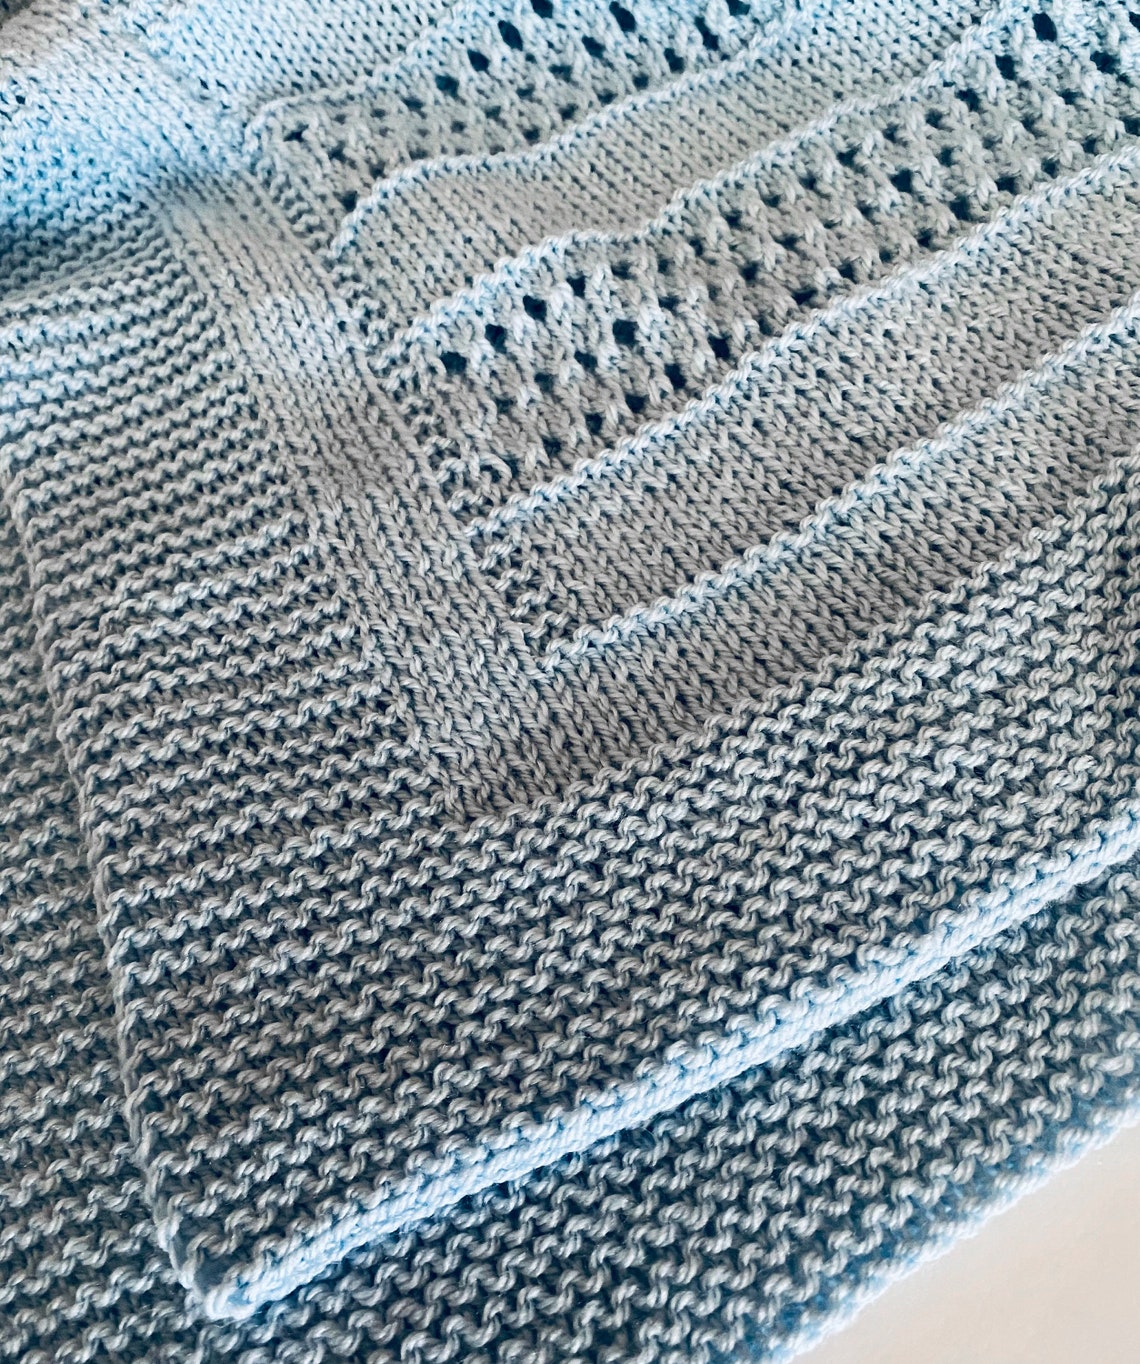 Ridges & Lace Baby Blanket Knit Pattern Download - Etsy